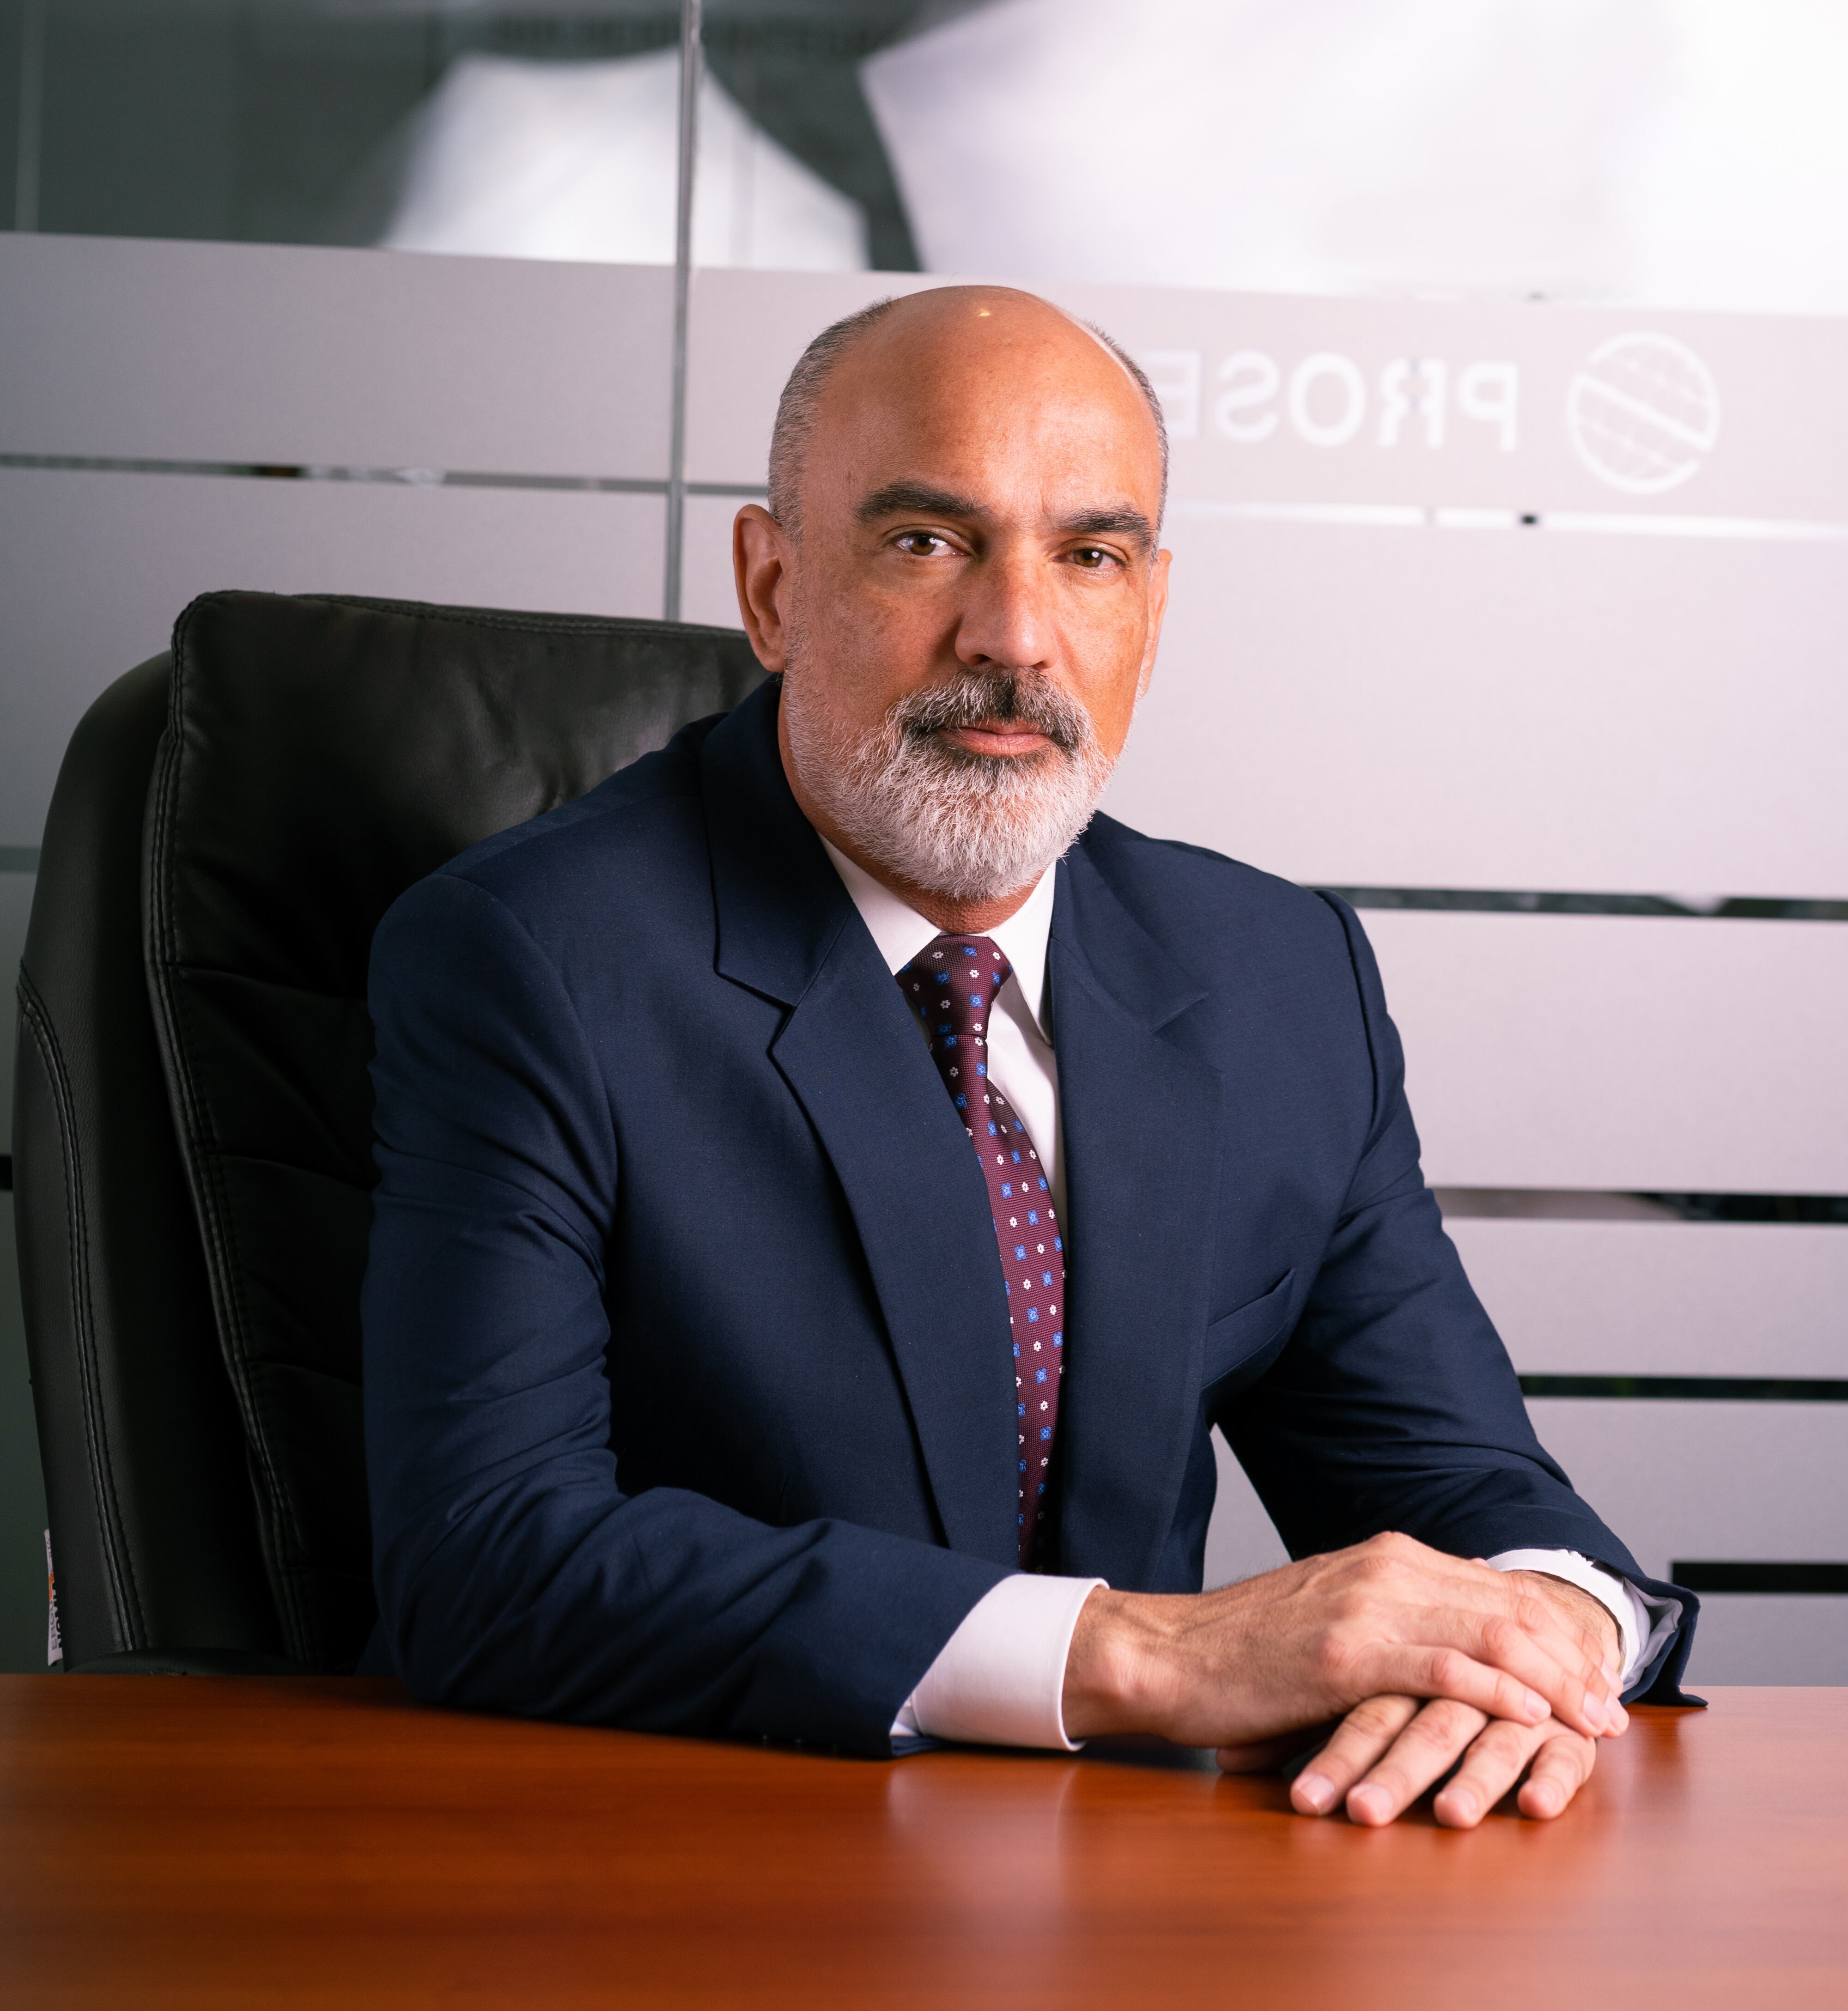 Gian Franco Mazza Coquis, director general de Prosegur Security.